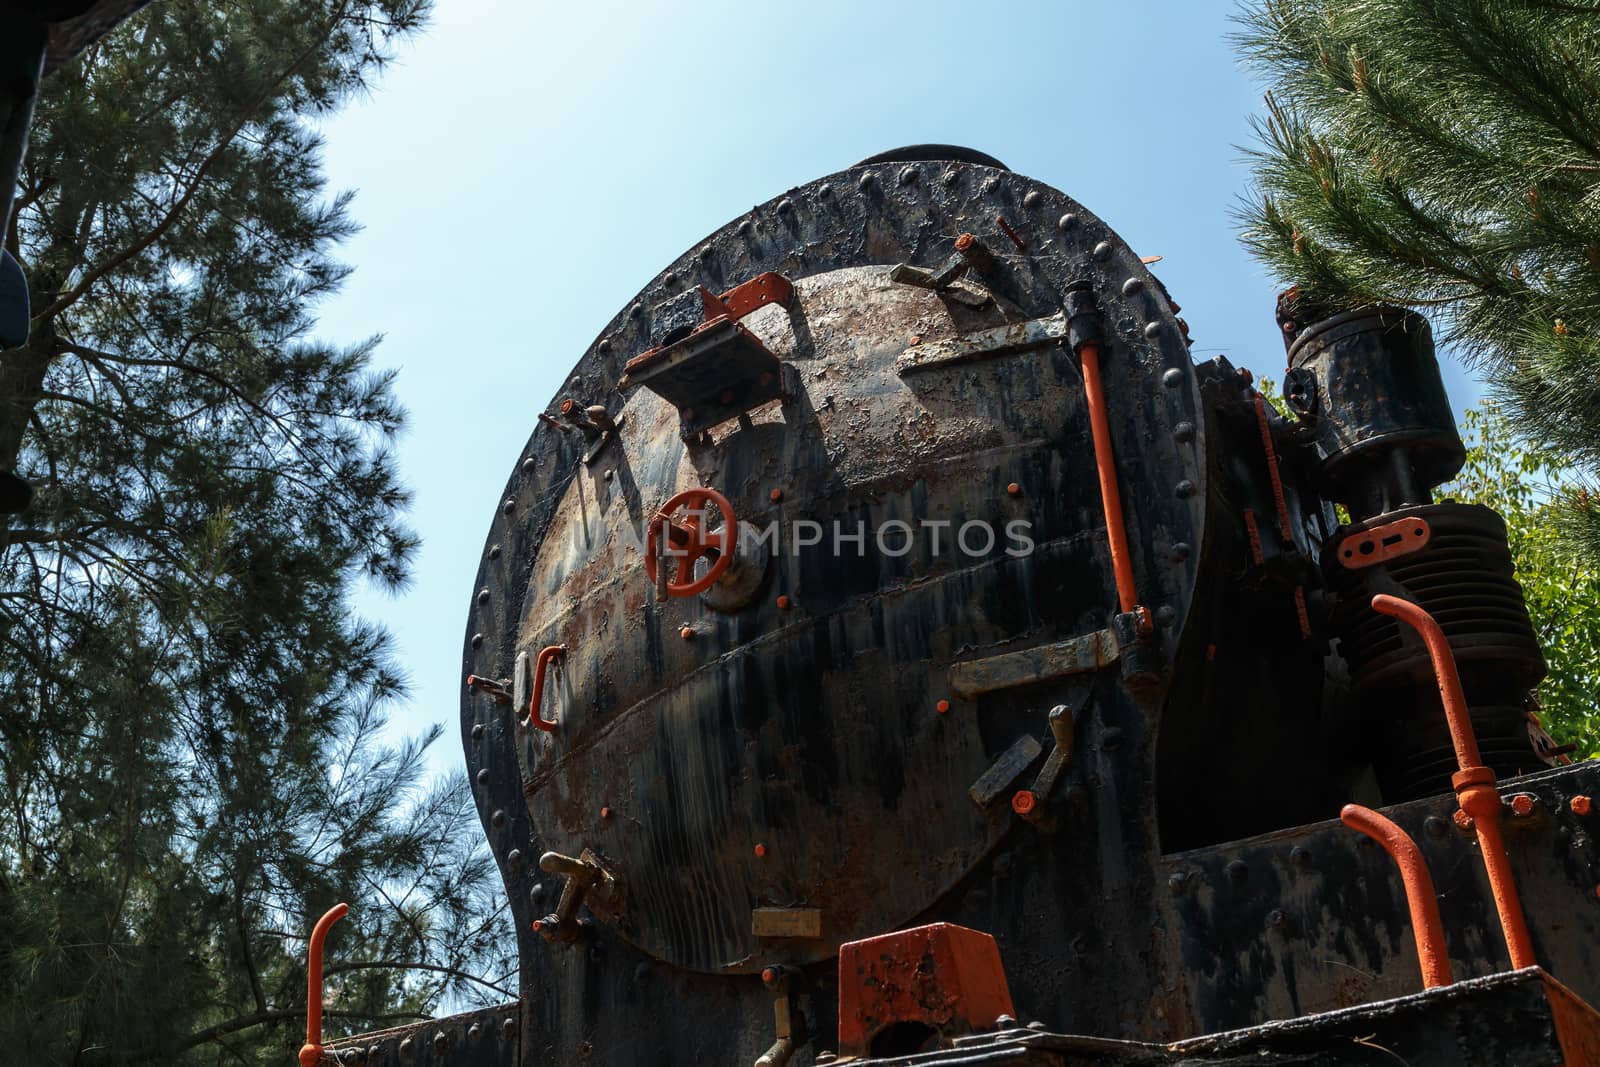 Old Train Locomotive by niglaynike